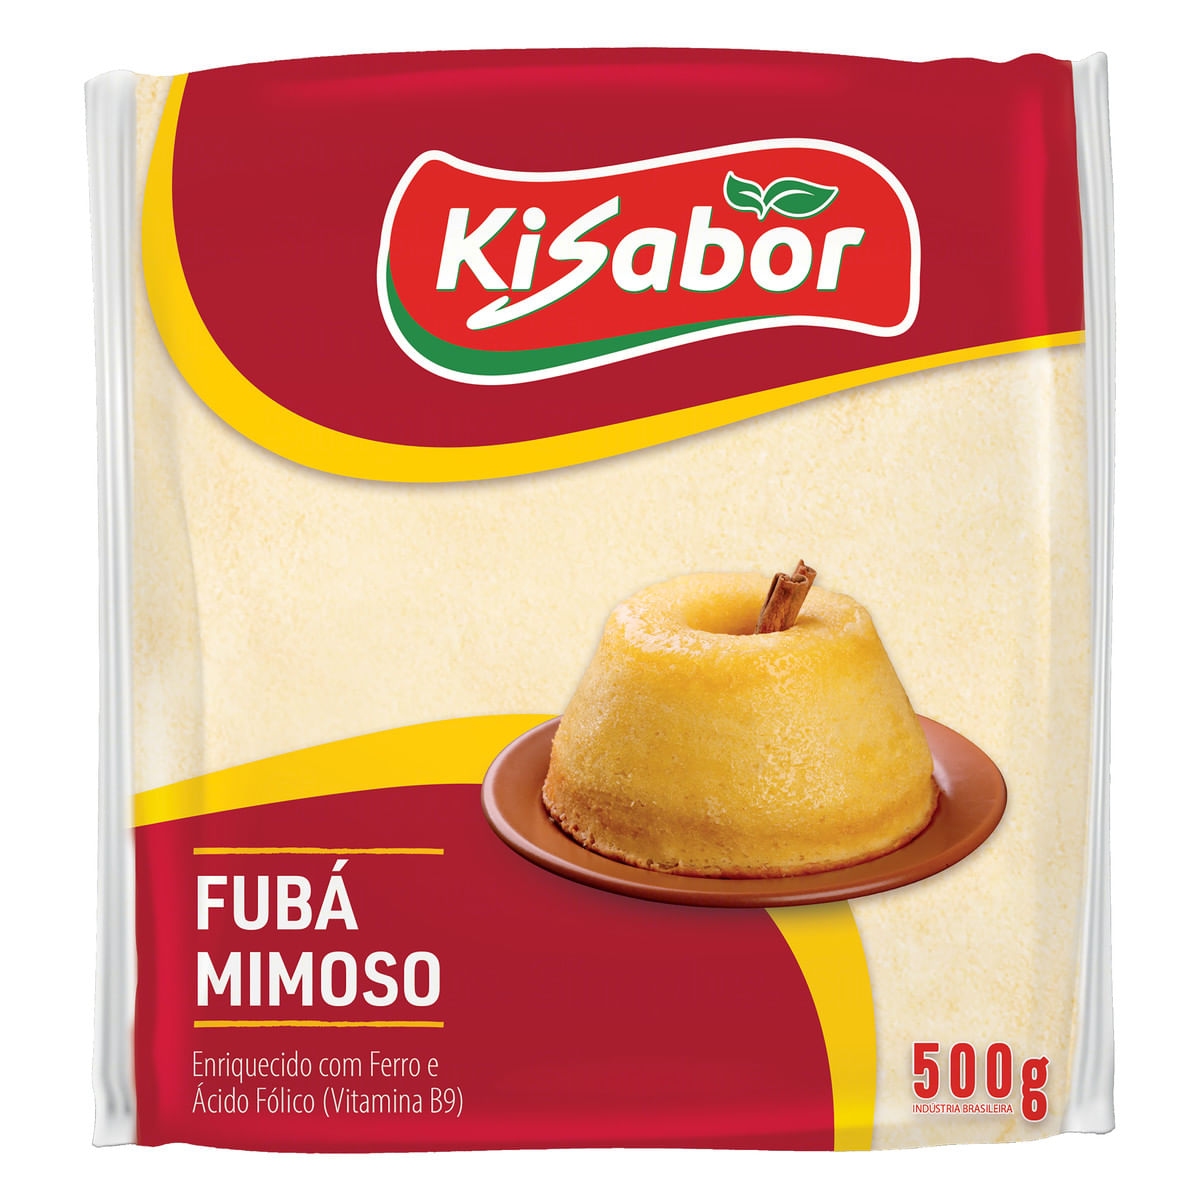 fuba-mimoso-kisabor-pacote-500g-1.jpg